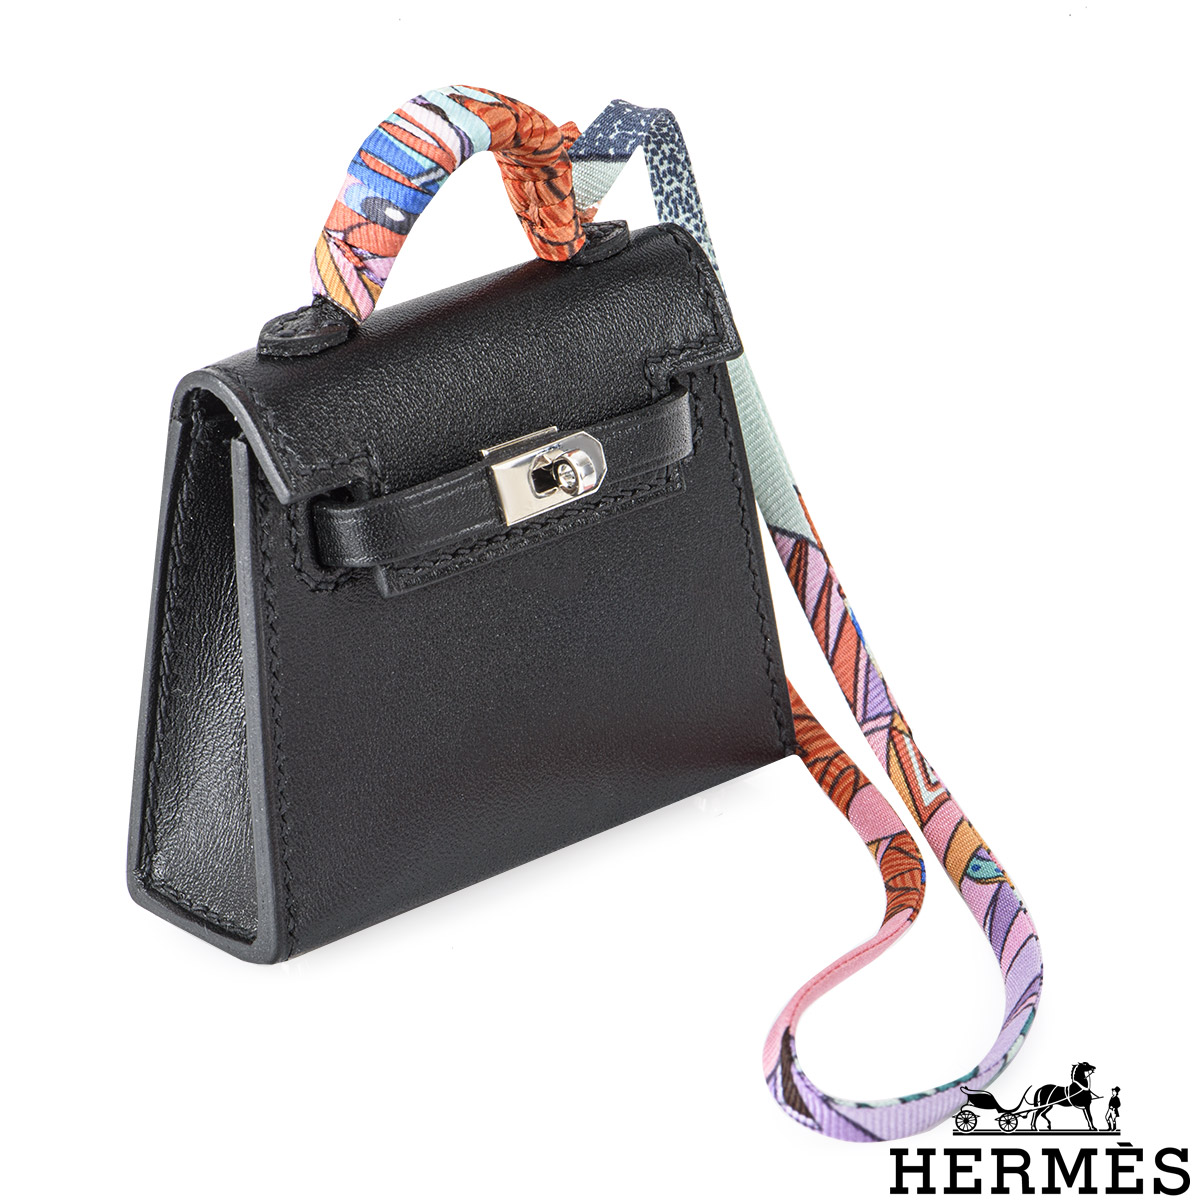 Handmade The Mini kelly bag charm,Black epsom leather micro kelly bag